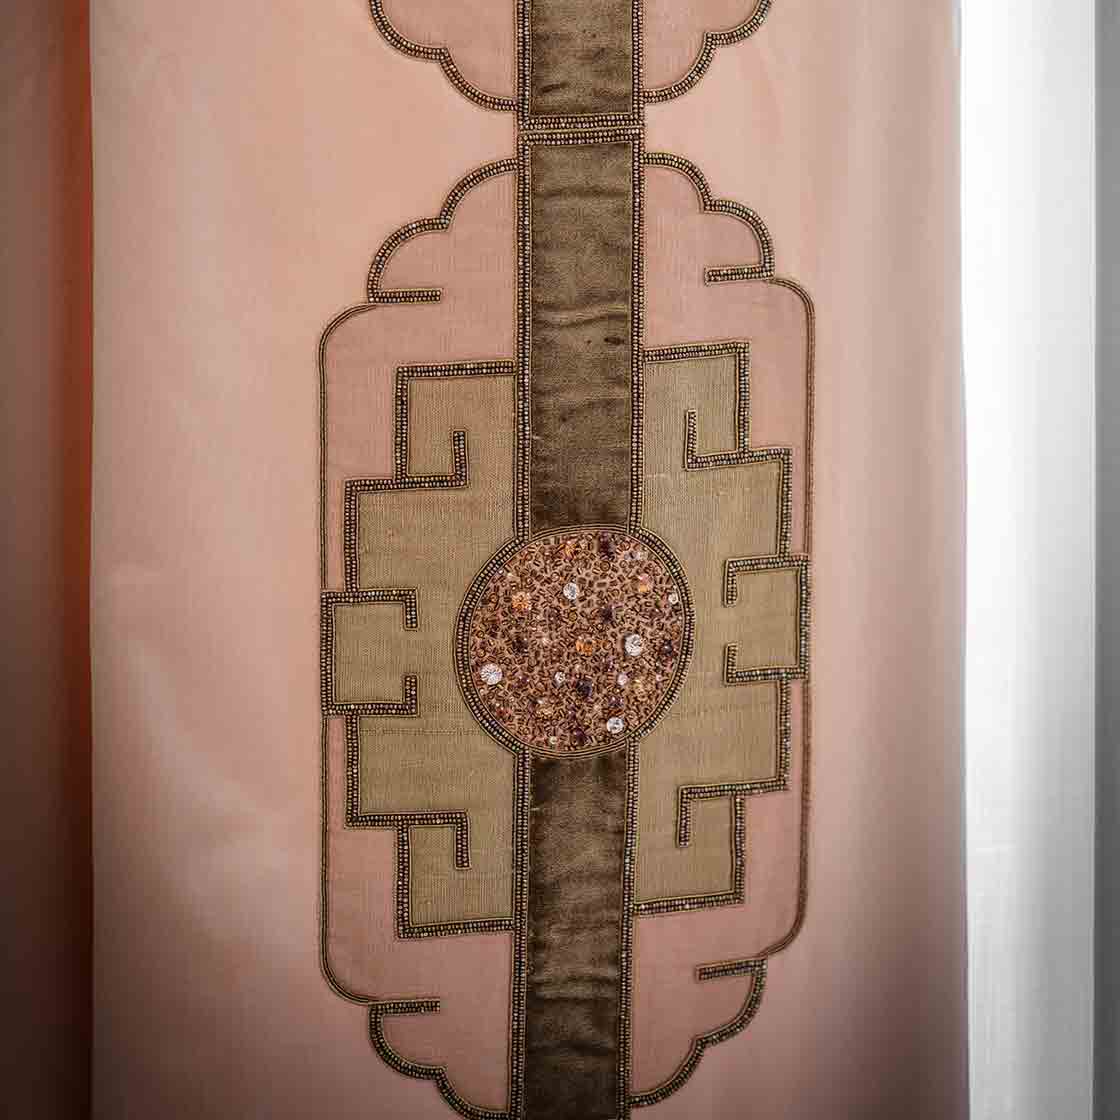 Tamburlaine embroidery on drapes in Lagan Silk - Sugared Almond - Beaumont & Fletcher